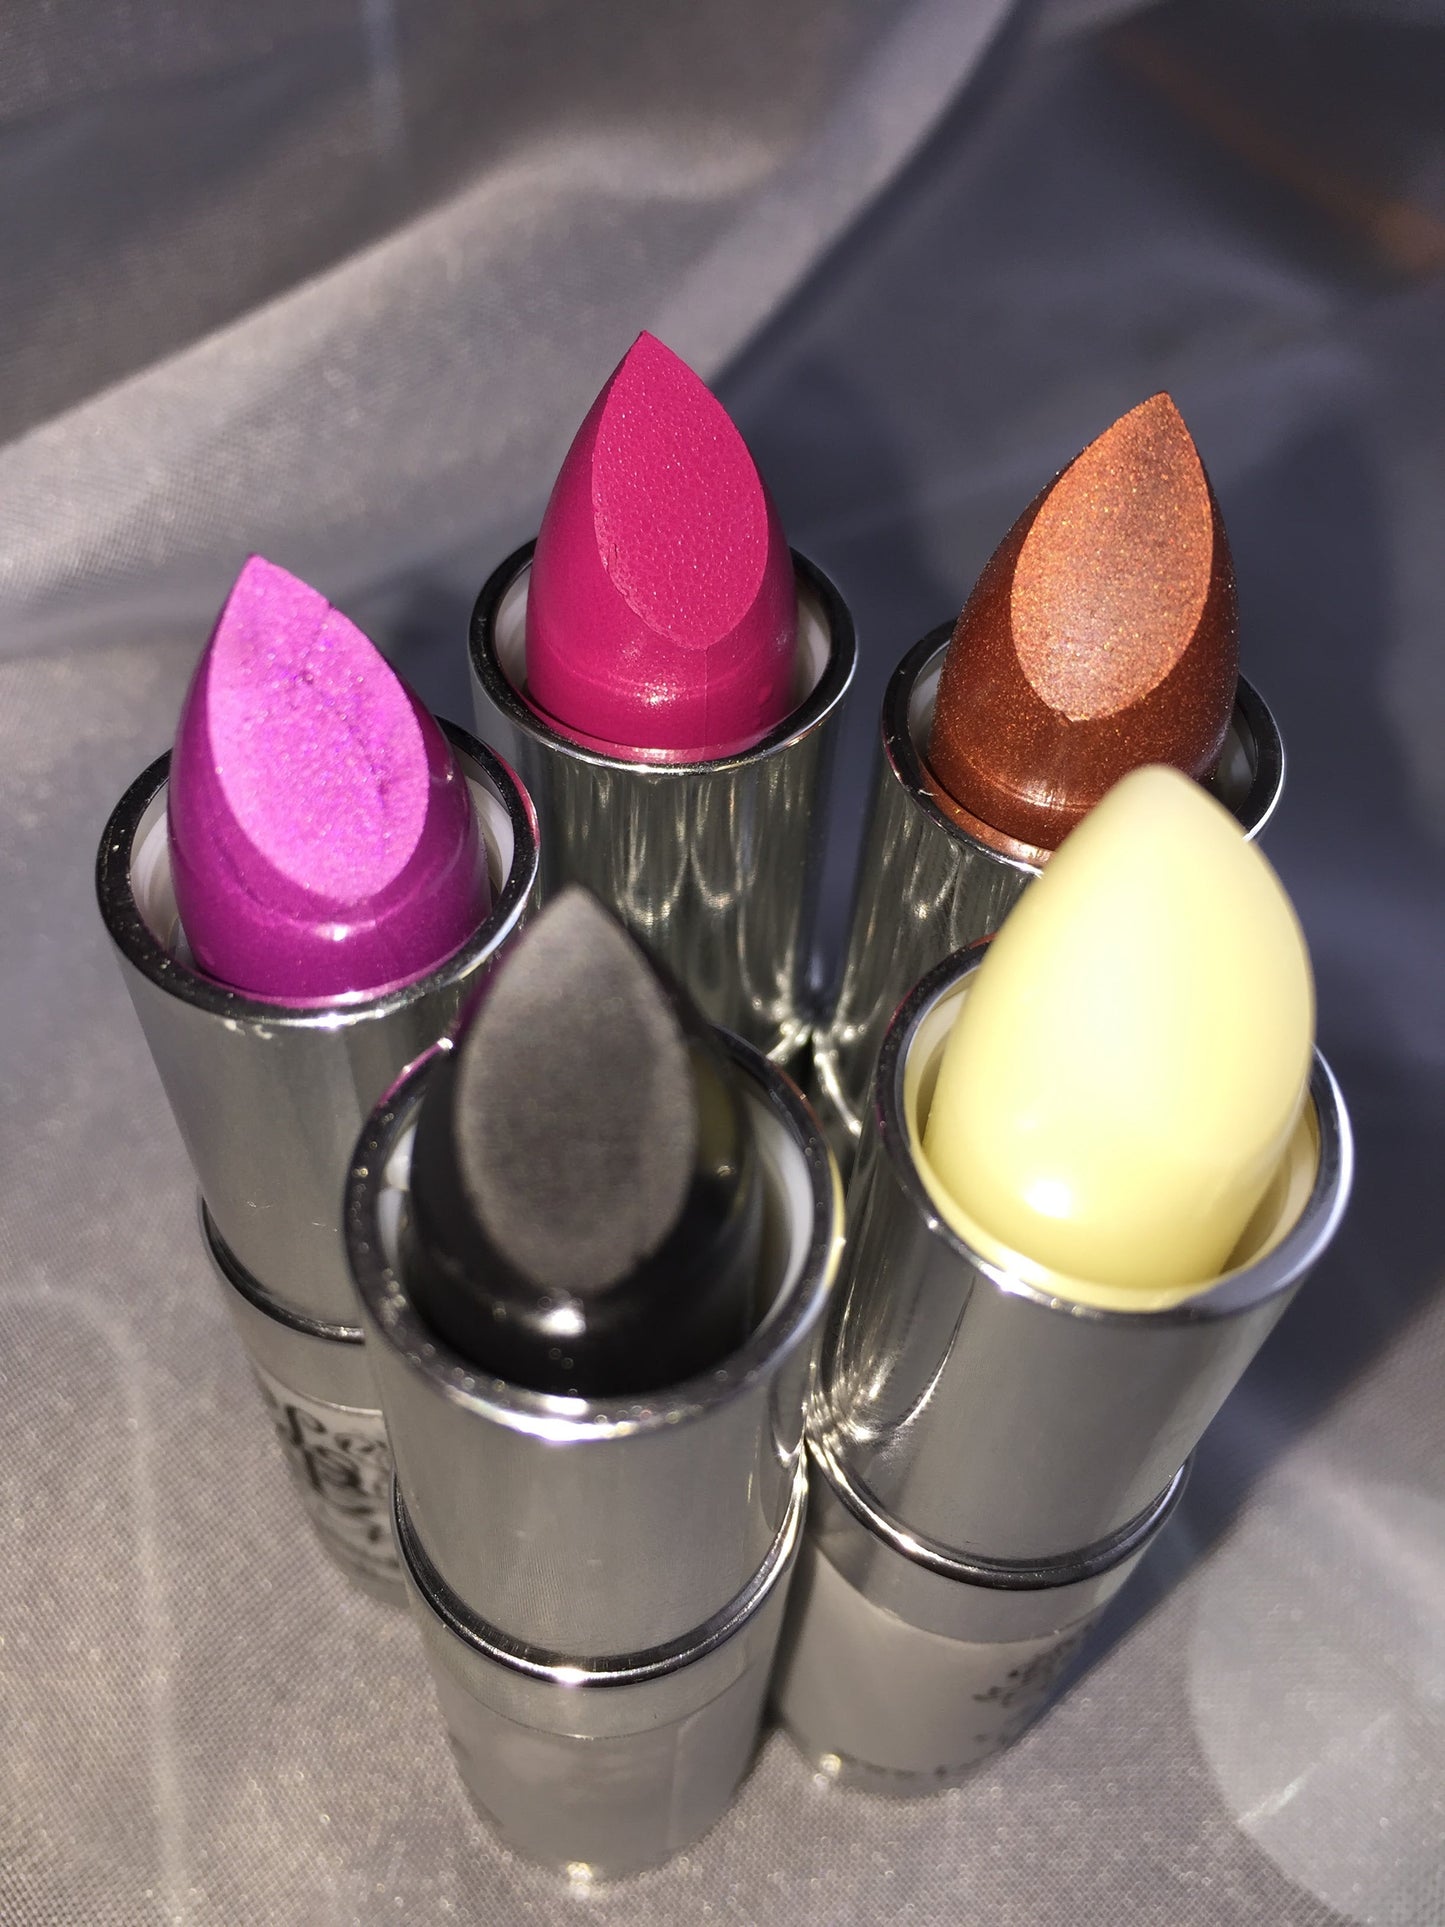 Shimmering Fuchsia, Luxhan Beauty, Lipstick